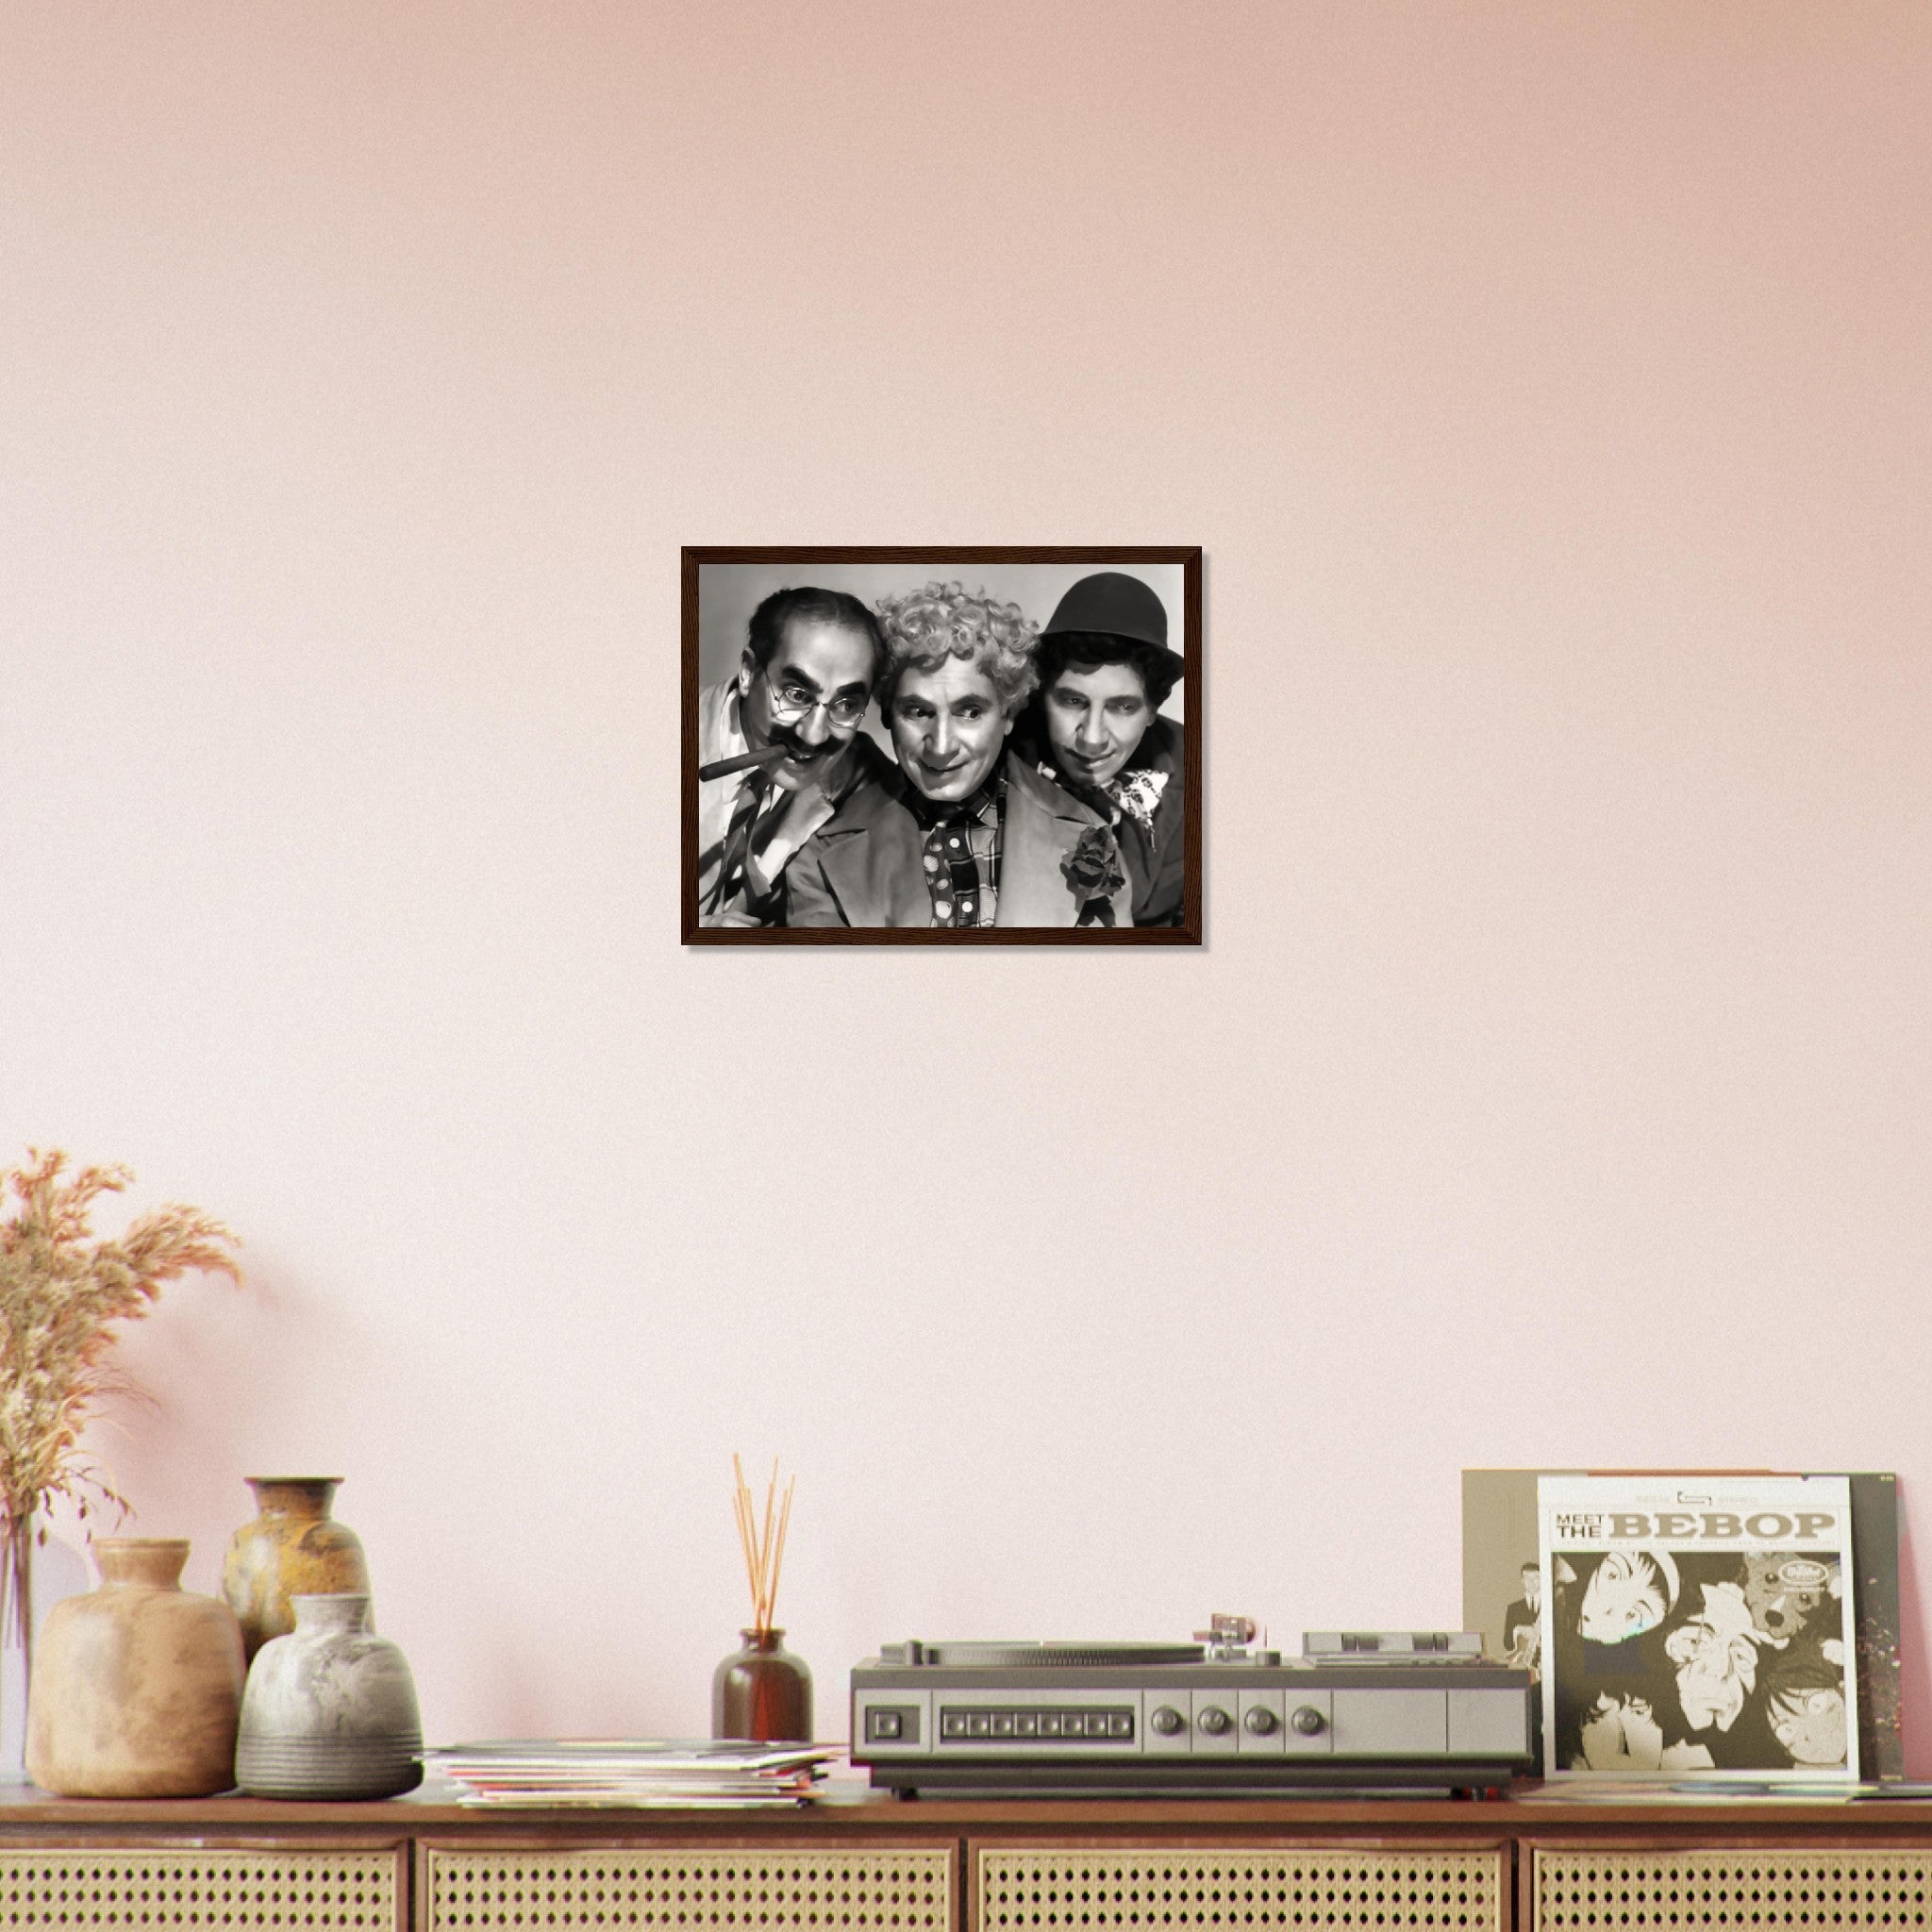 Marx Brothers Framed, Vintage Photo - Iconic Marx Brothers Framed Print - Groucho, Harpo, And Chico Marx - WallArtPrints4U